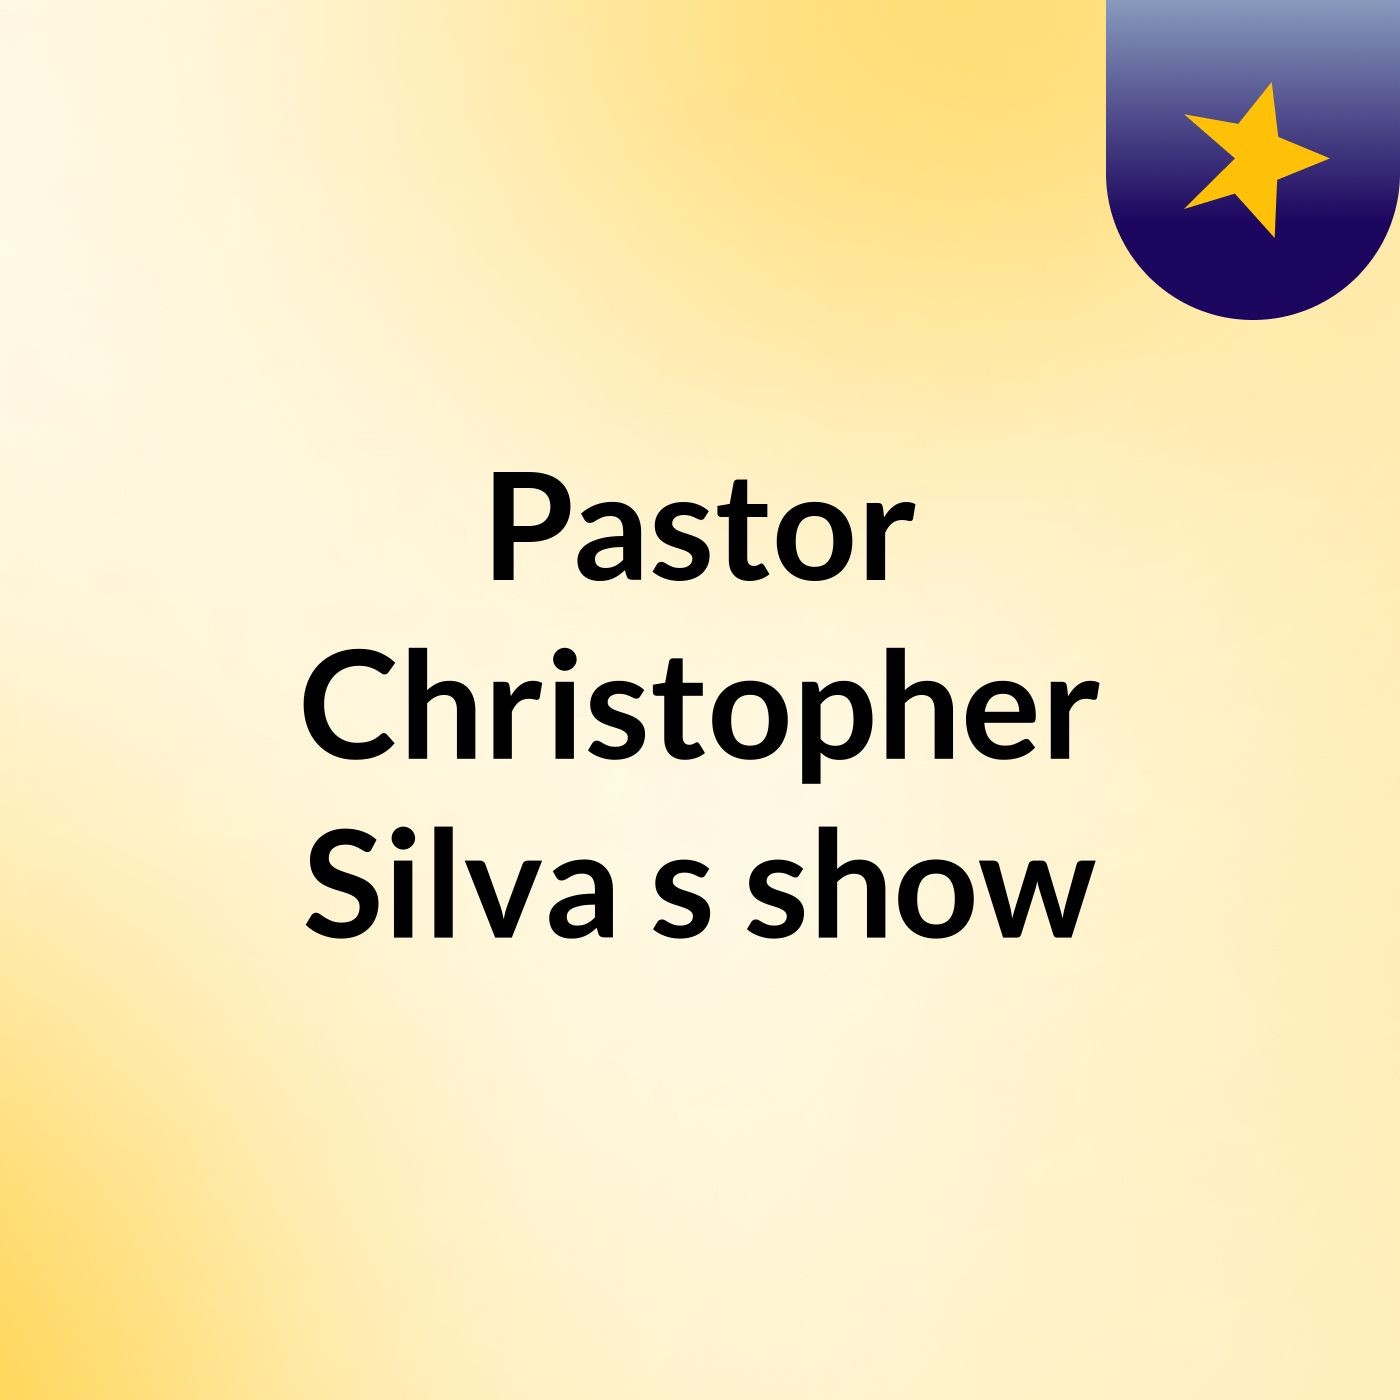 Pastor Christopher Silva's show